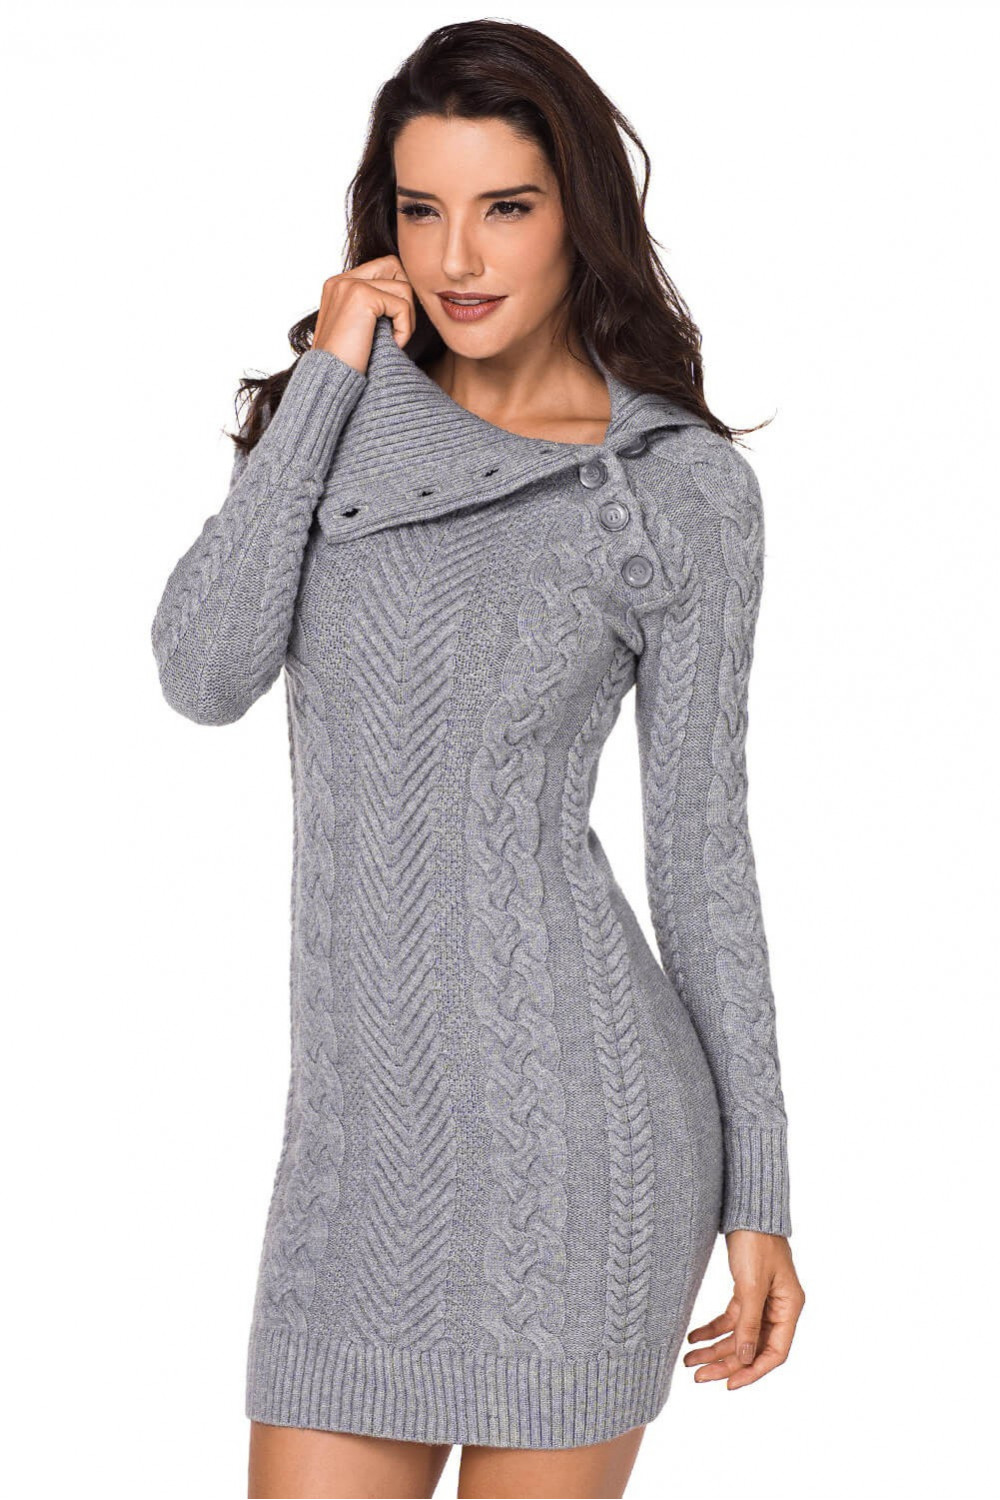 Gray sweater dress